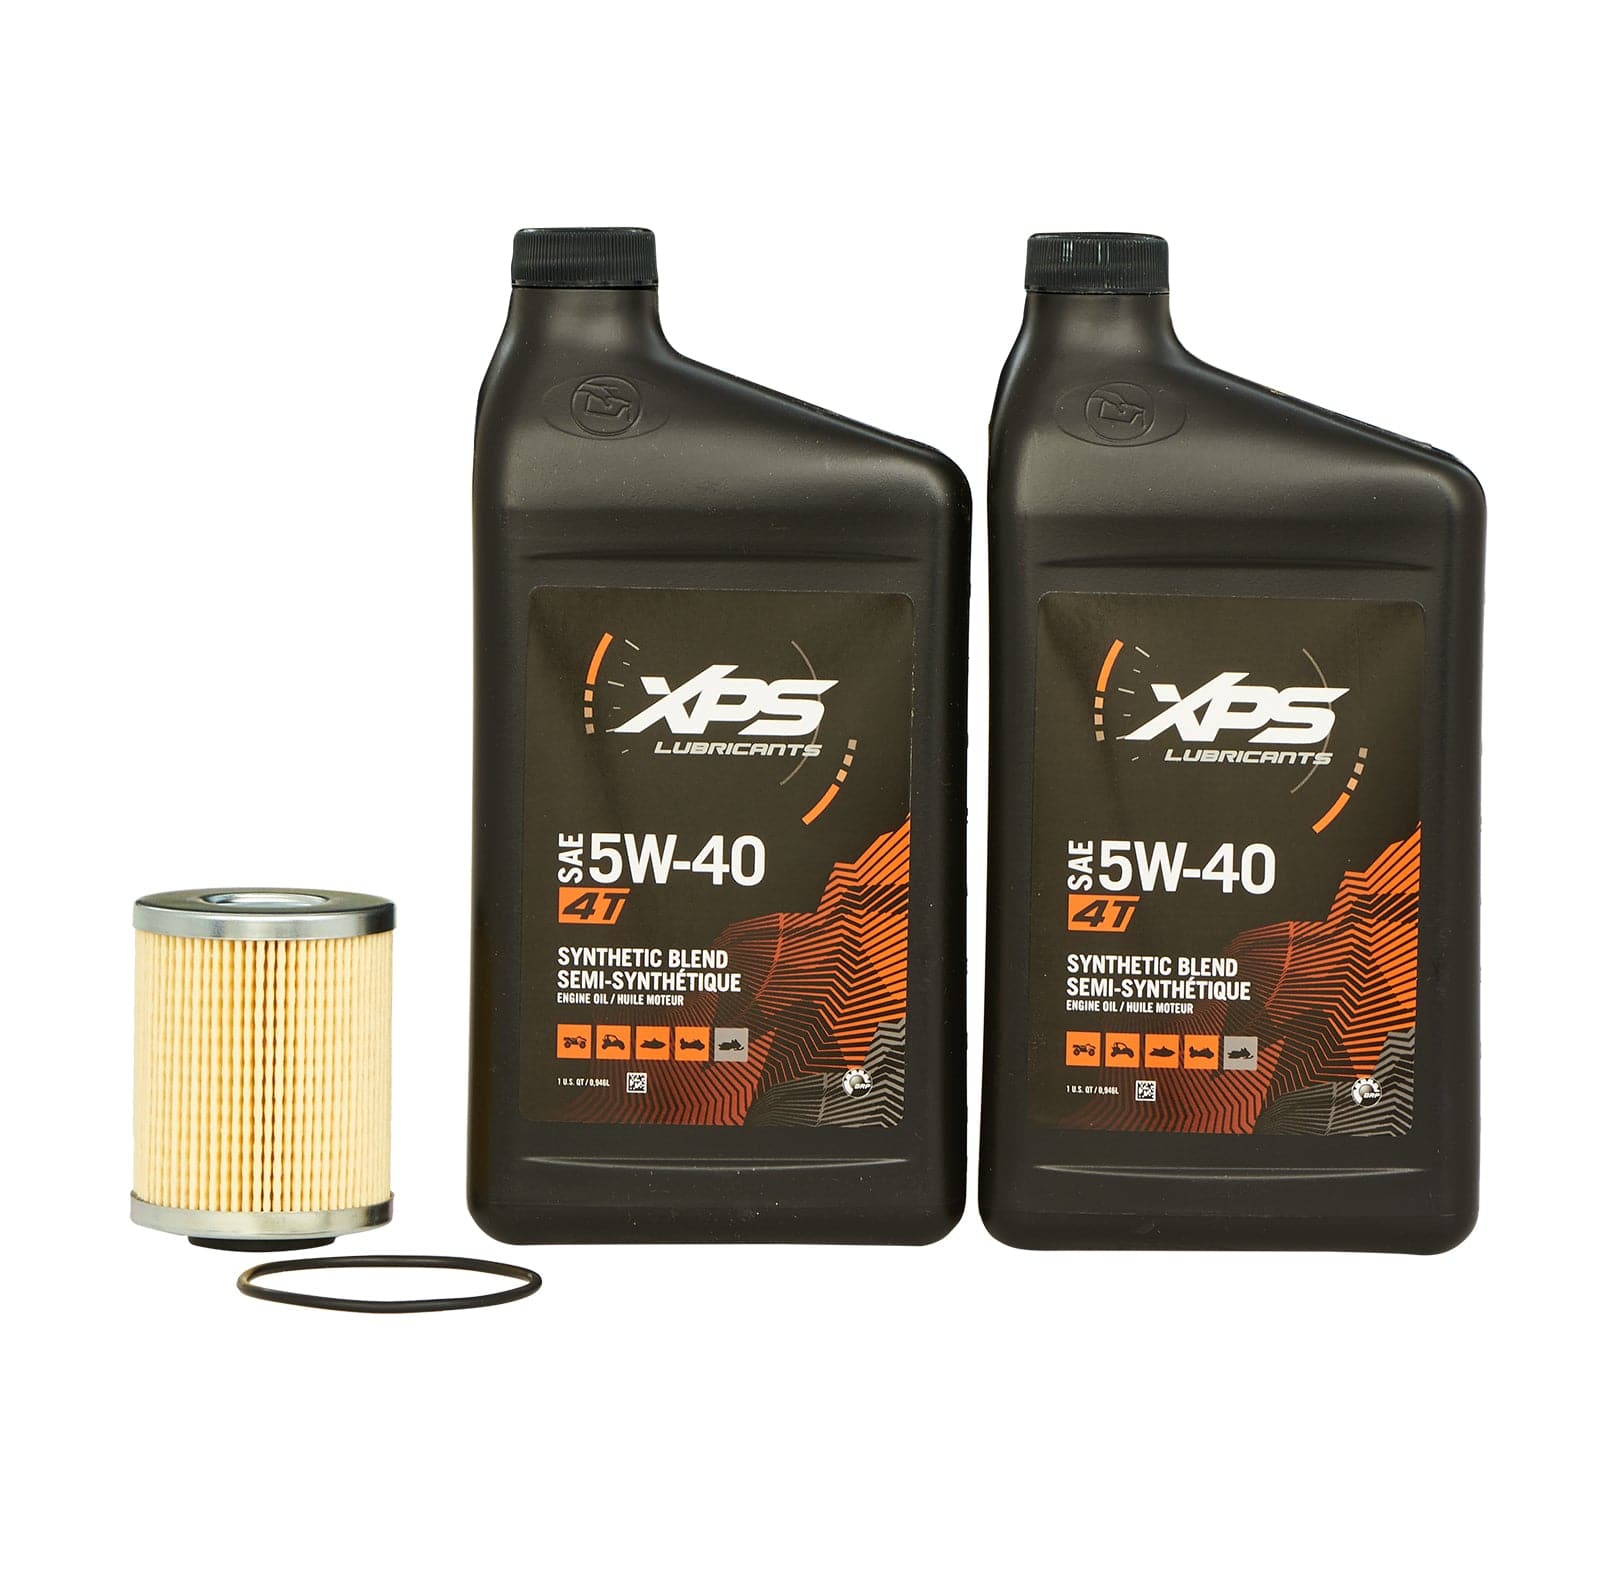 Maintenance Oil Kit for Sea-Doo Spark